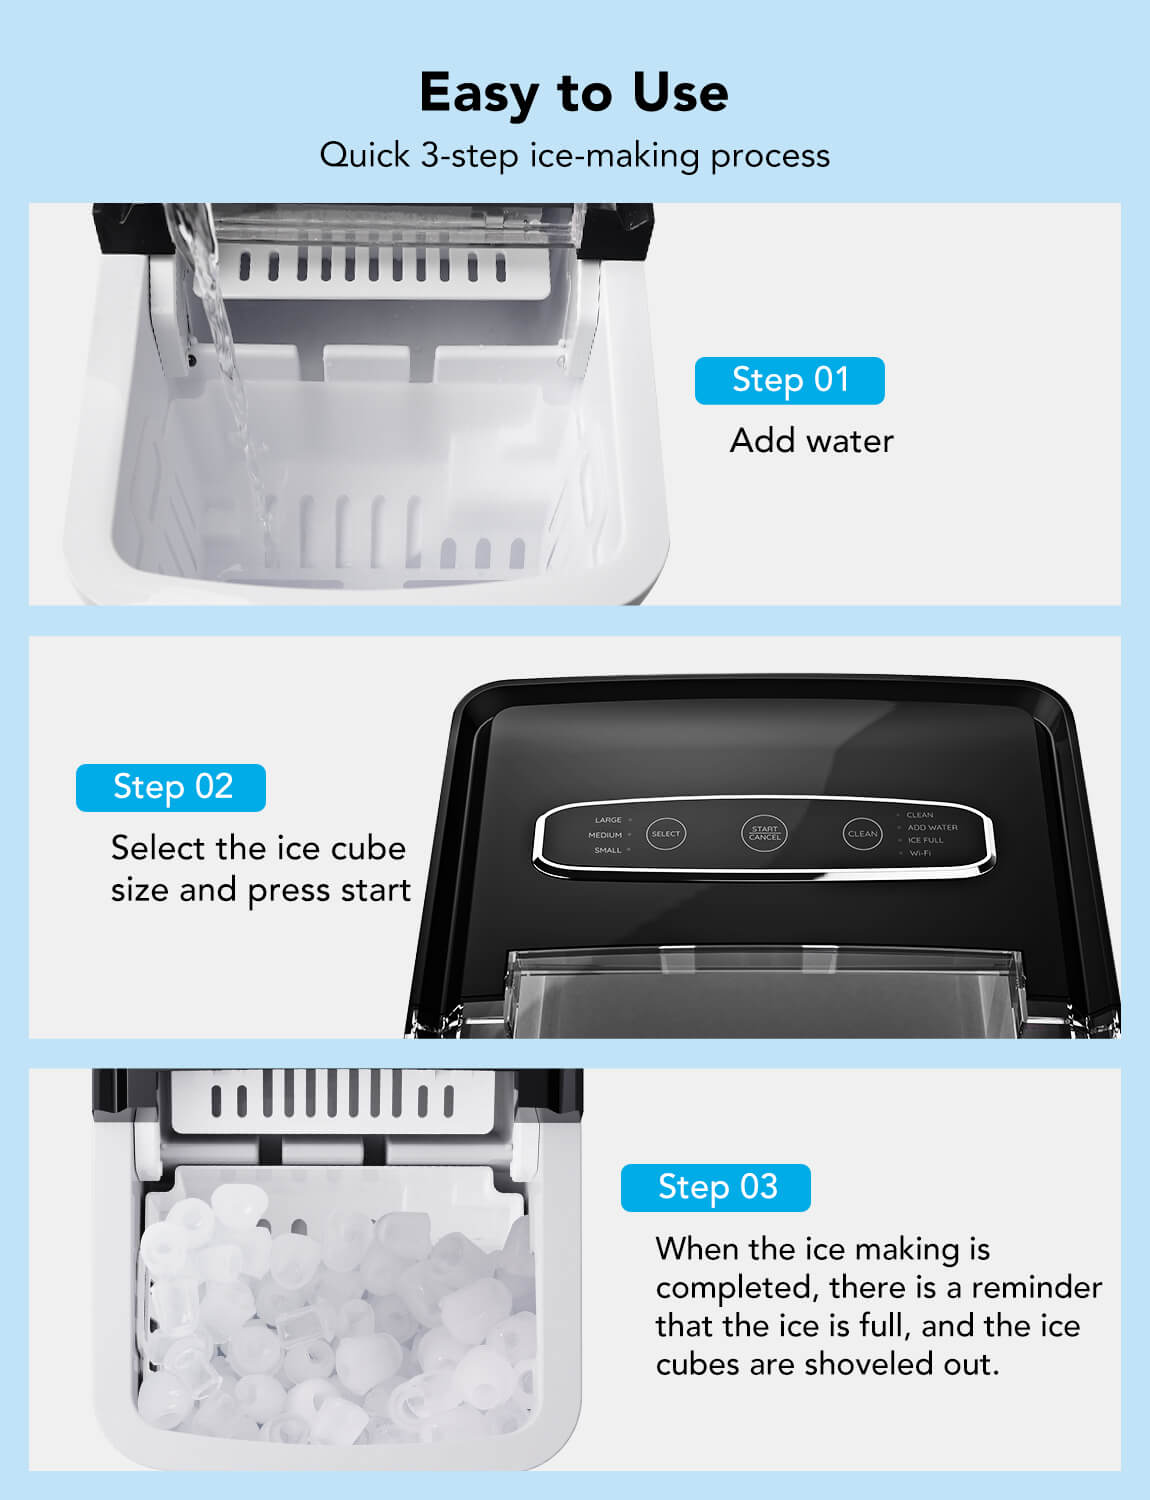 GoveeLife Portable Countertop Ice Maker